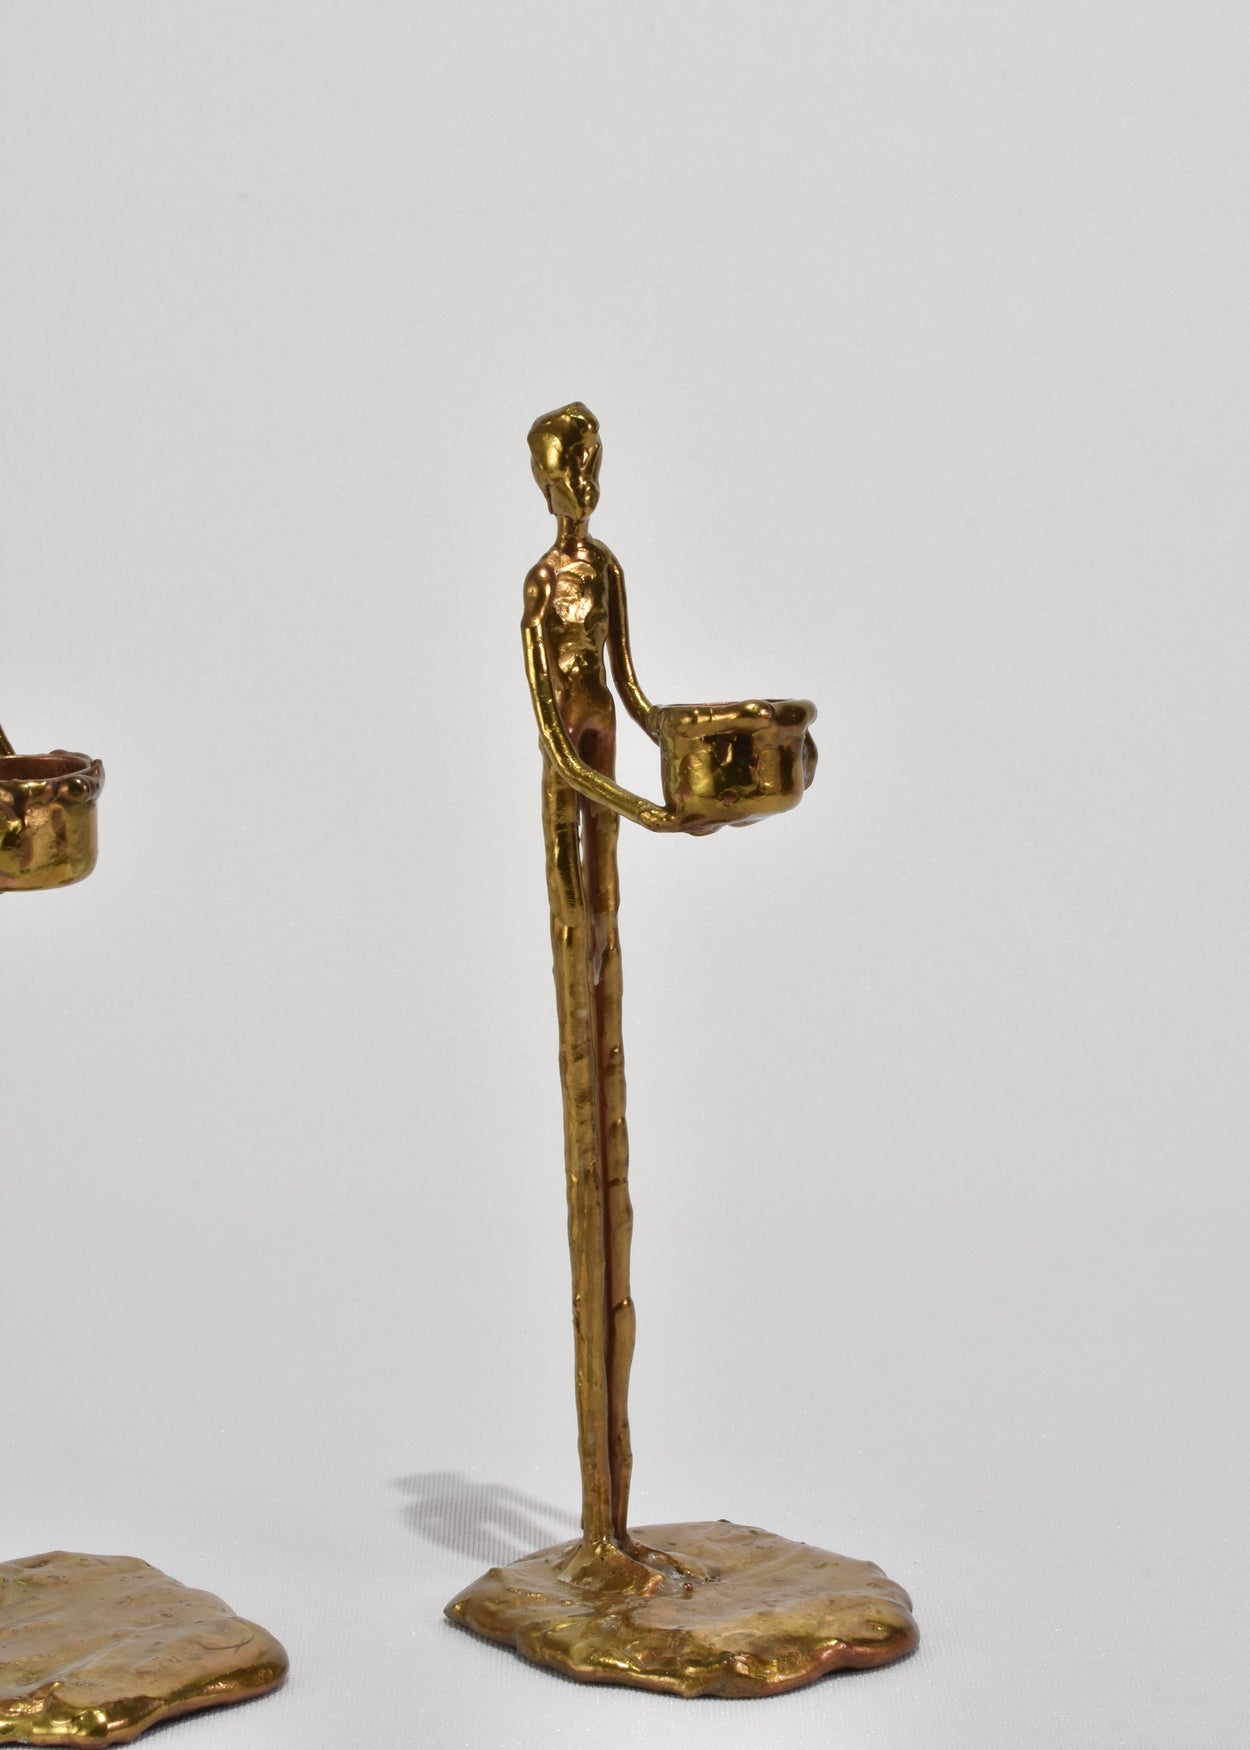 Figural Brass Candleholder Set